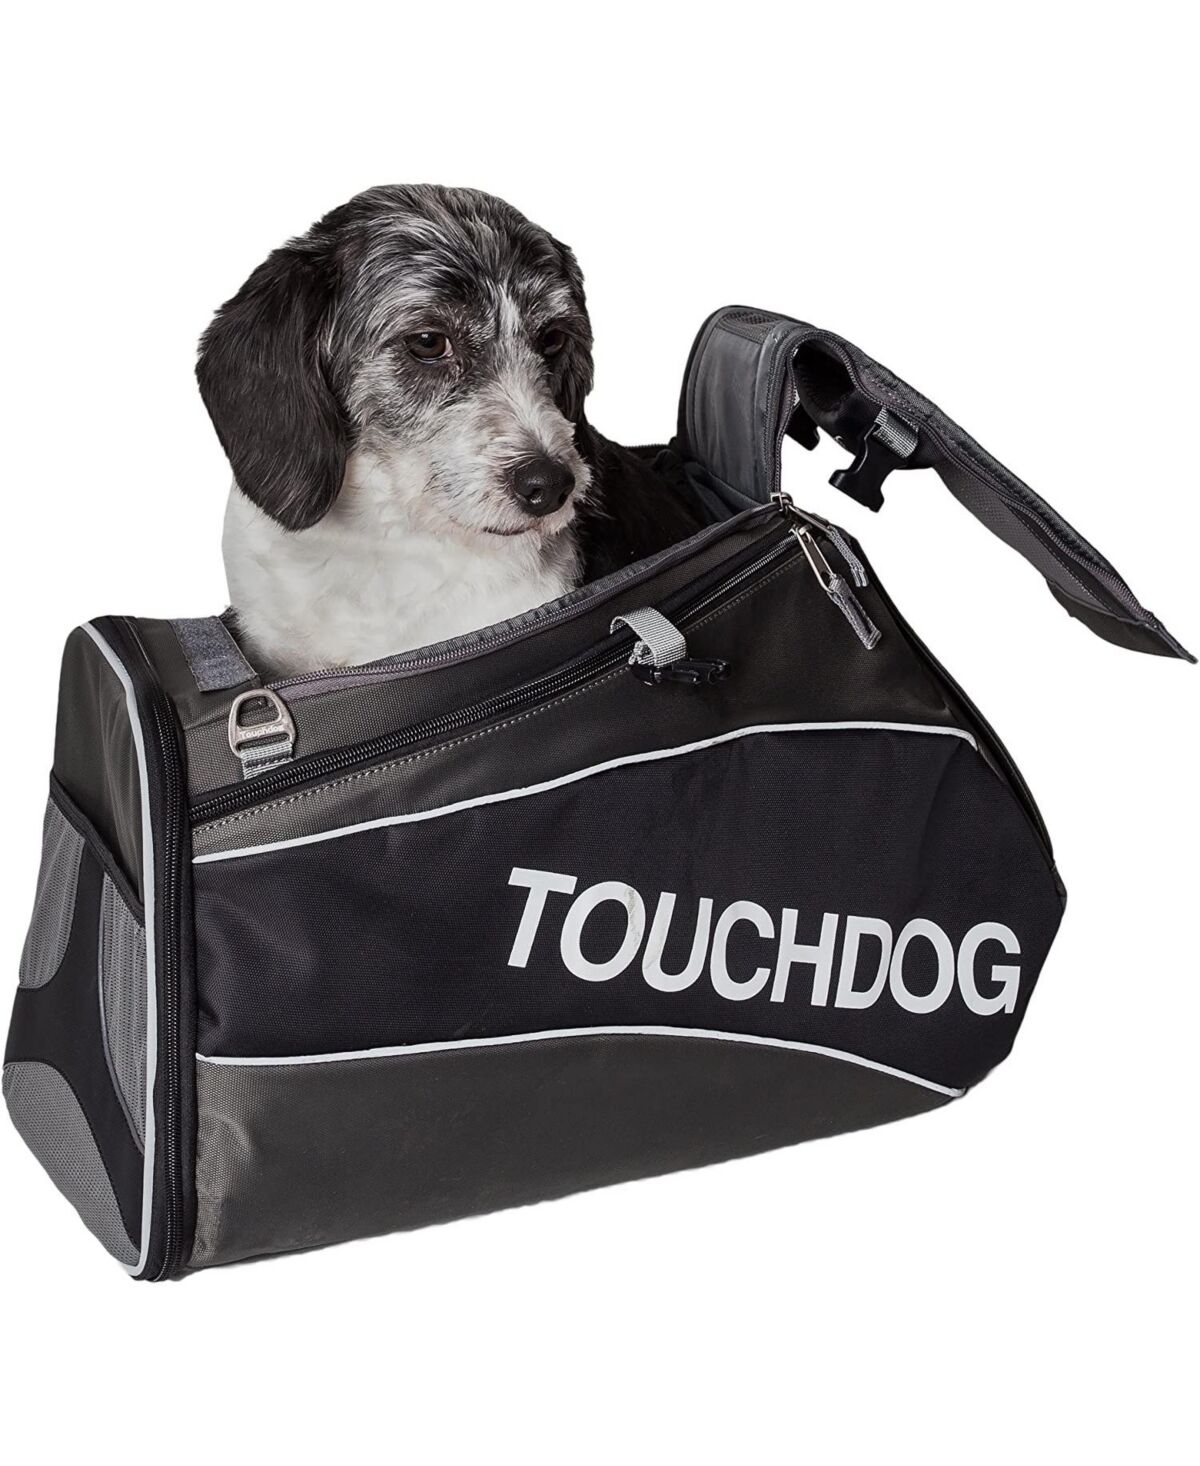 Touchdog Modern-Glide Airline Approved Water-Resistant Dog Carrier - Black